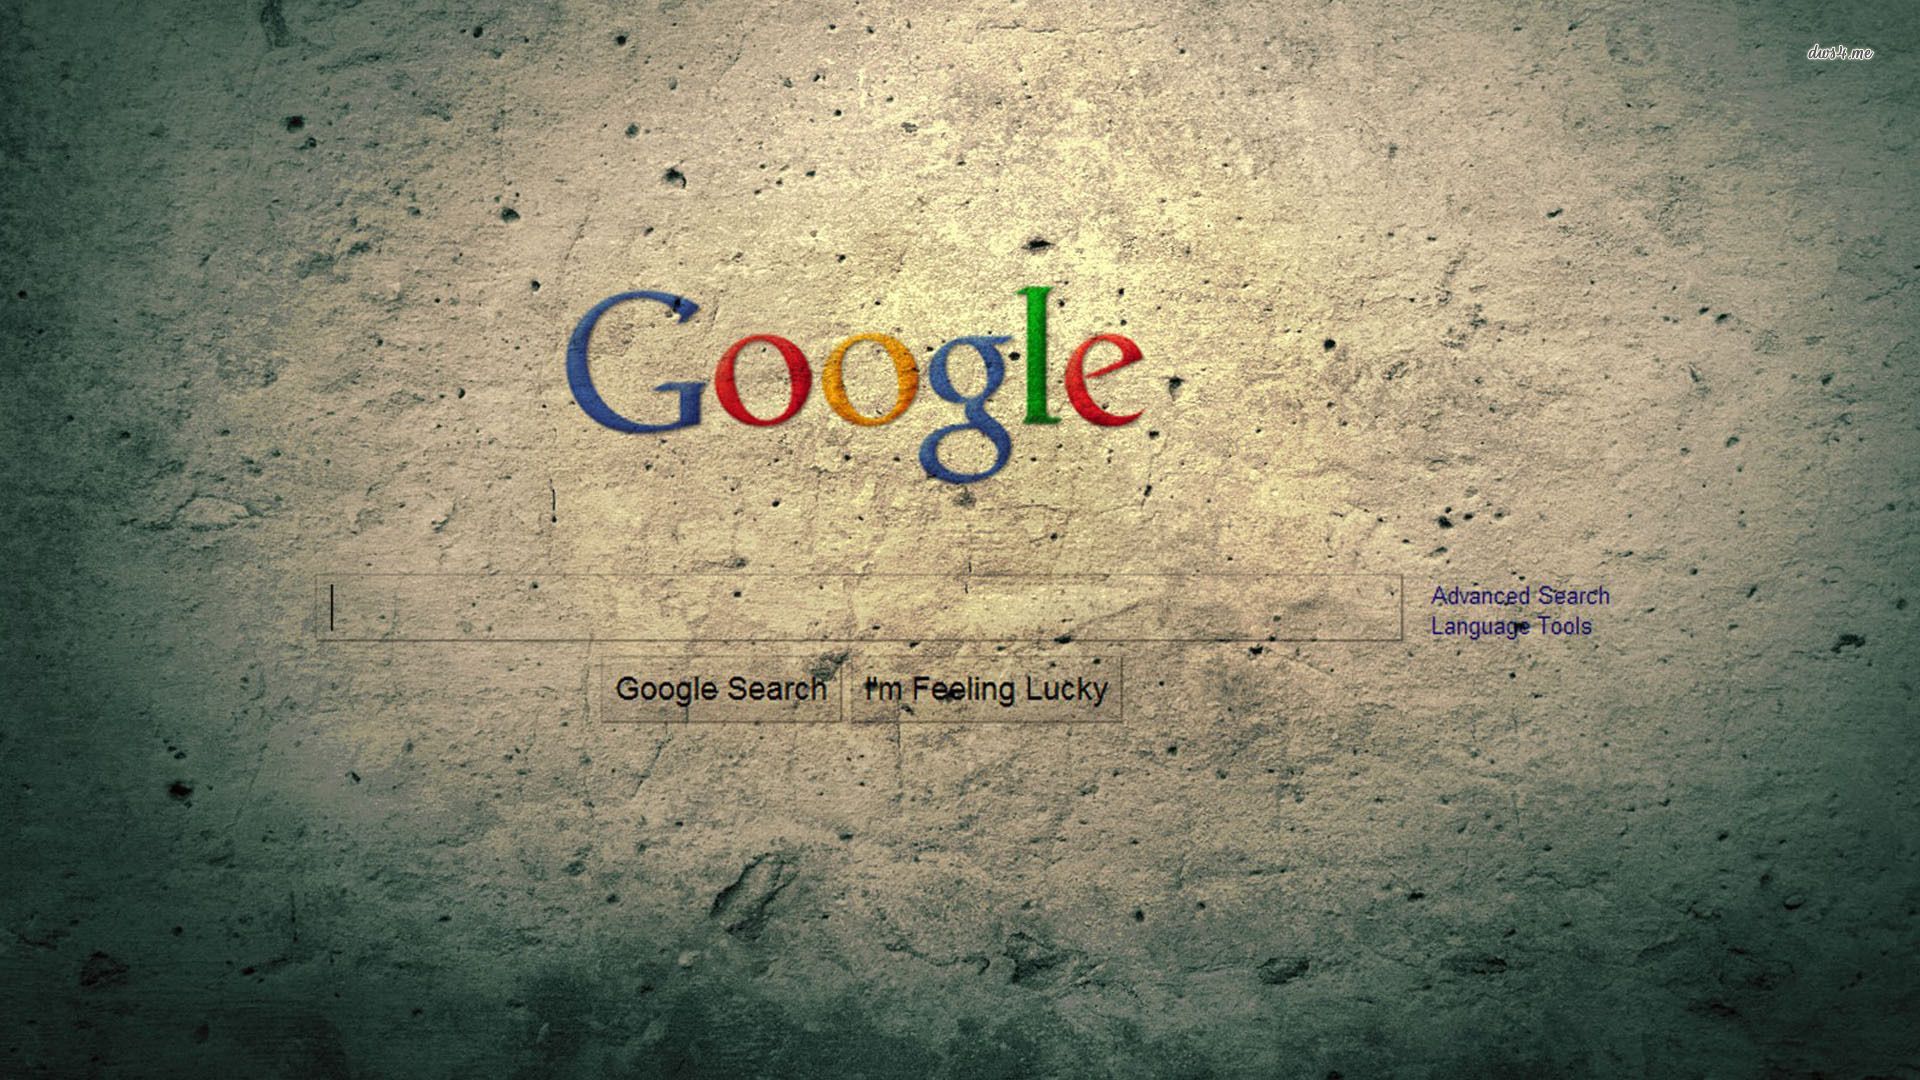 Grunge Google search wallpaper - Computer wallpapers - #19988